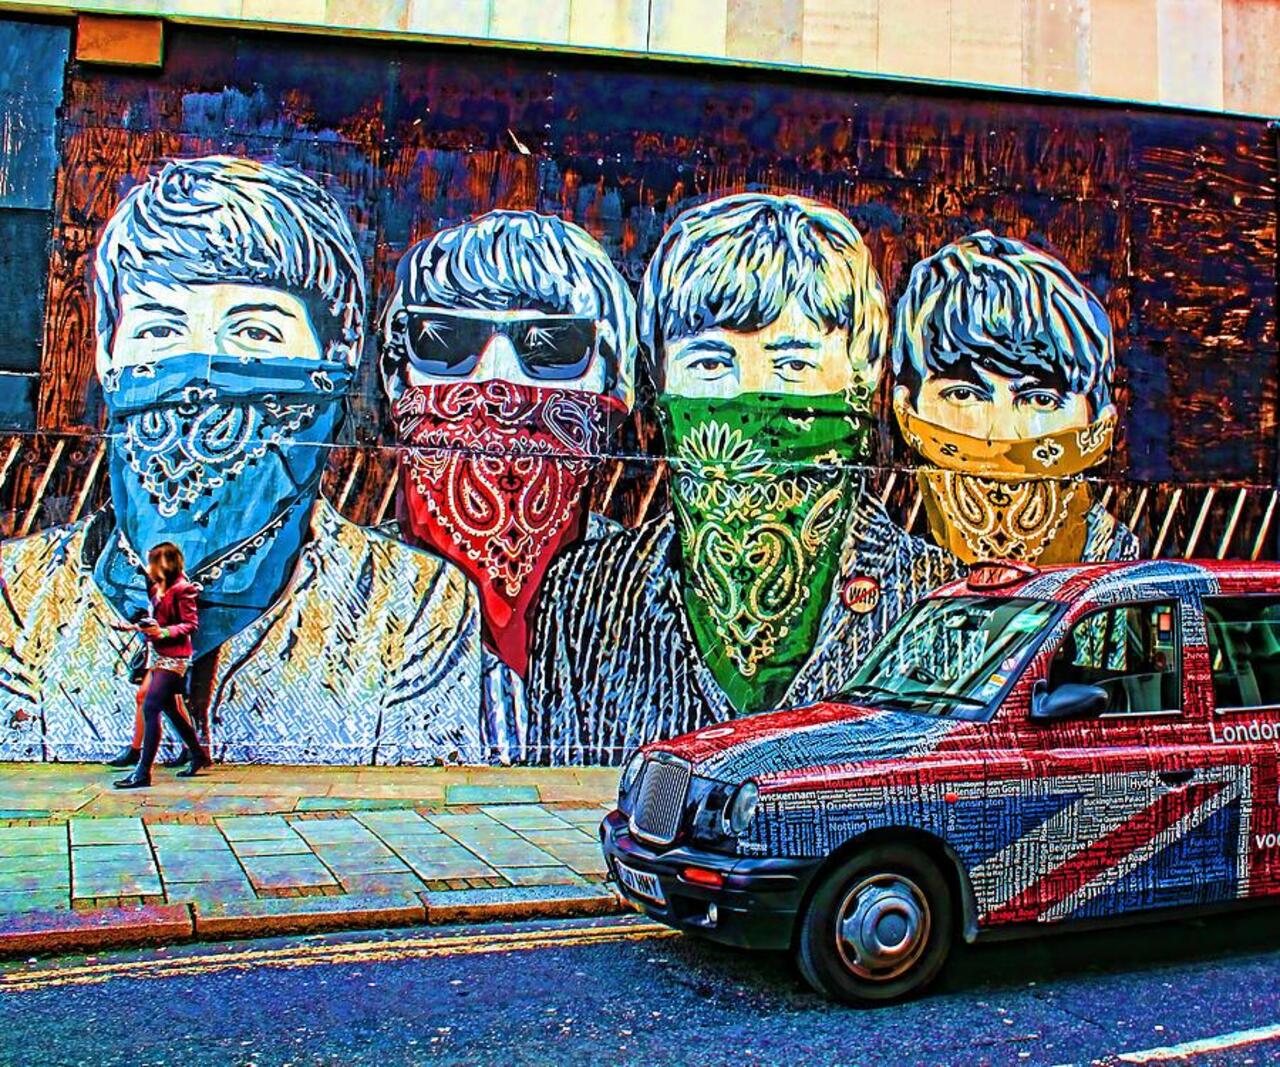 RT @Brindille_: #Streetart #urbanart #graffiti #mural "The Beatles" by #artist Mr.Brainwsh, London 2012. 
Photographer Jasna Buncic http://t.co/GpJSzUrvib